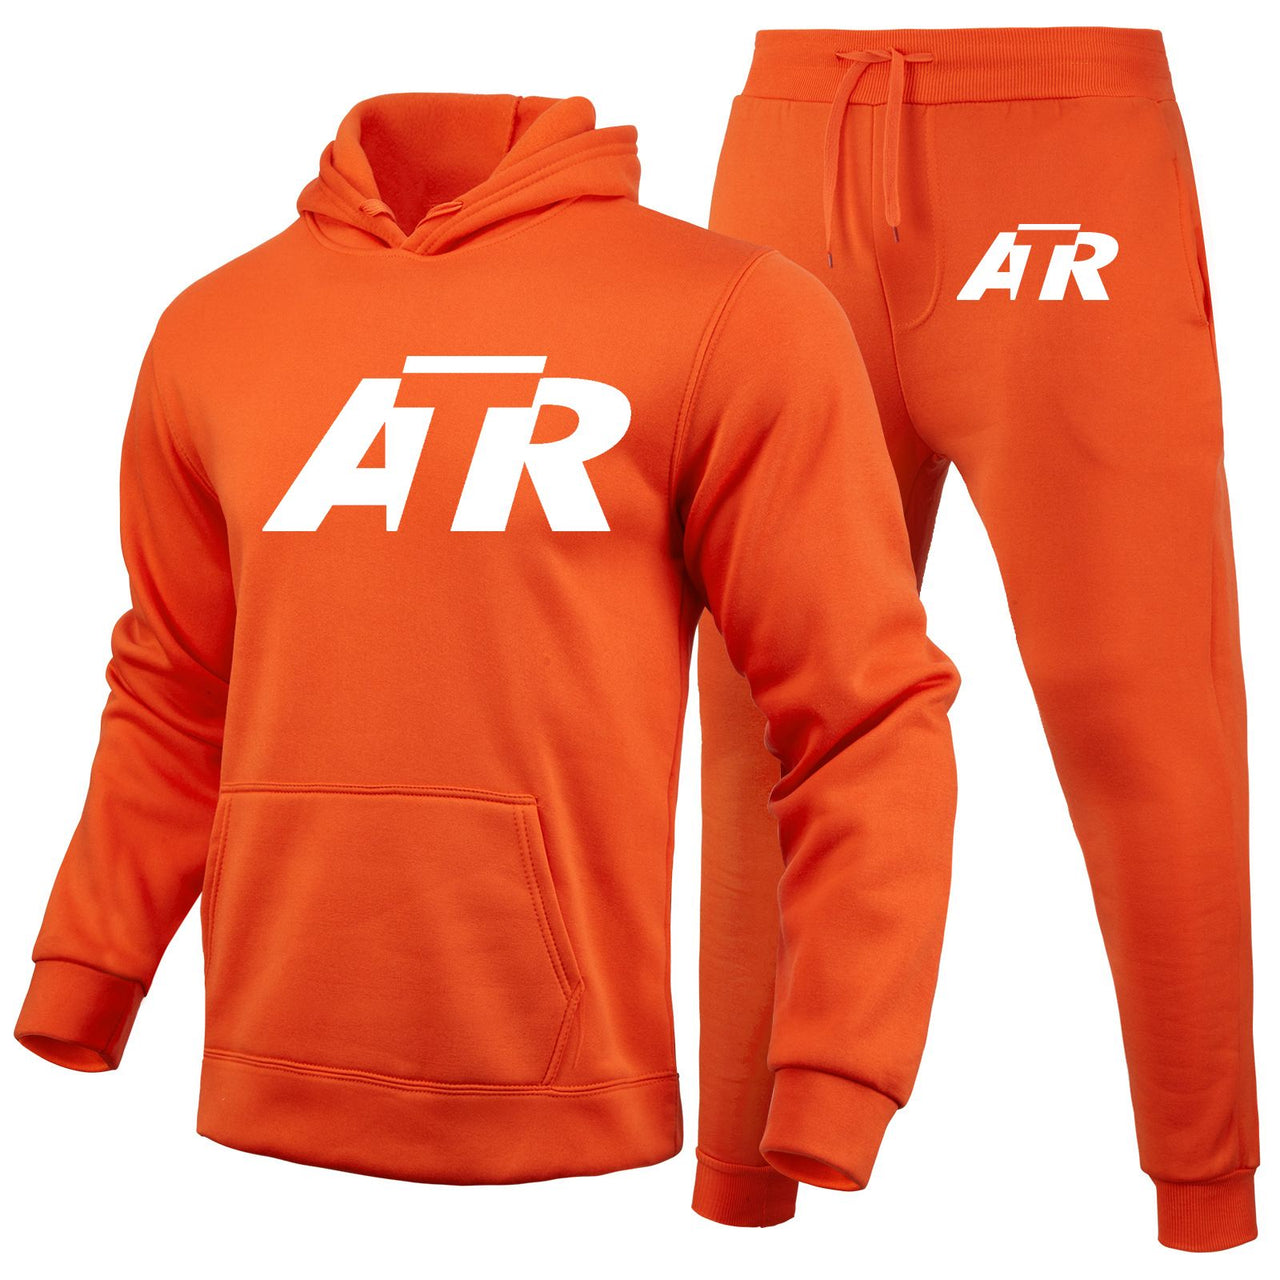 ATR & Text Designed Hoodies & Sweatpants Set